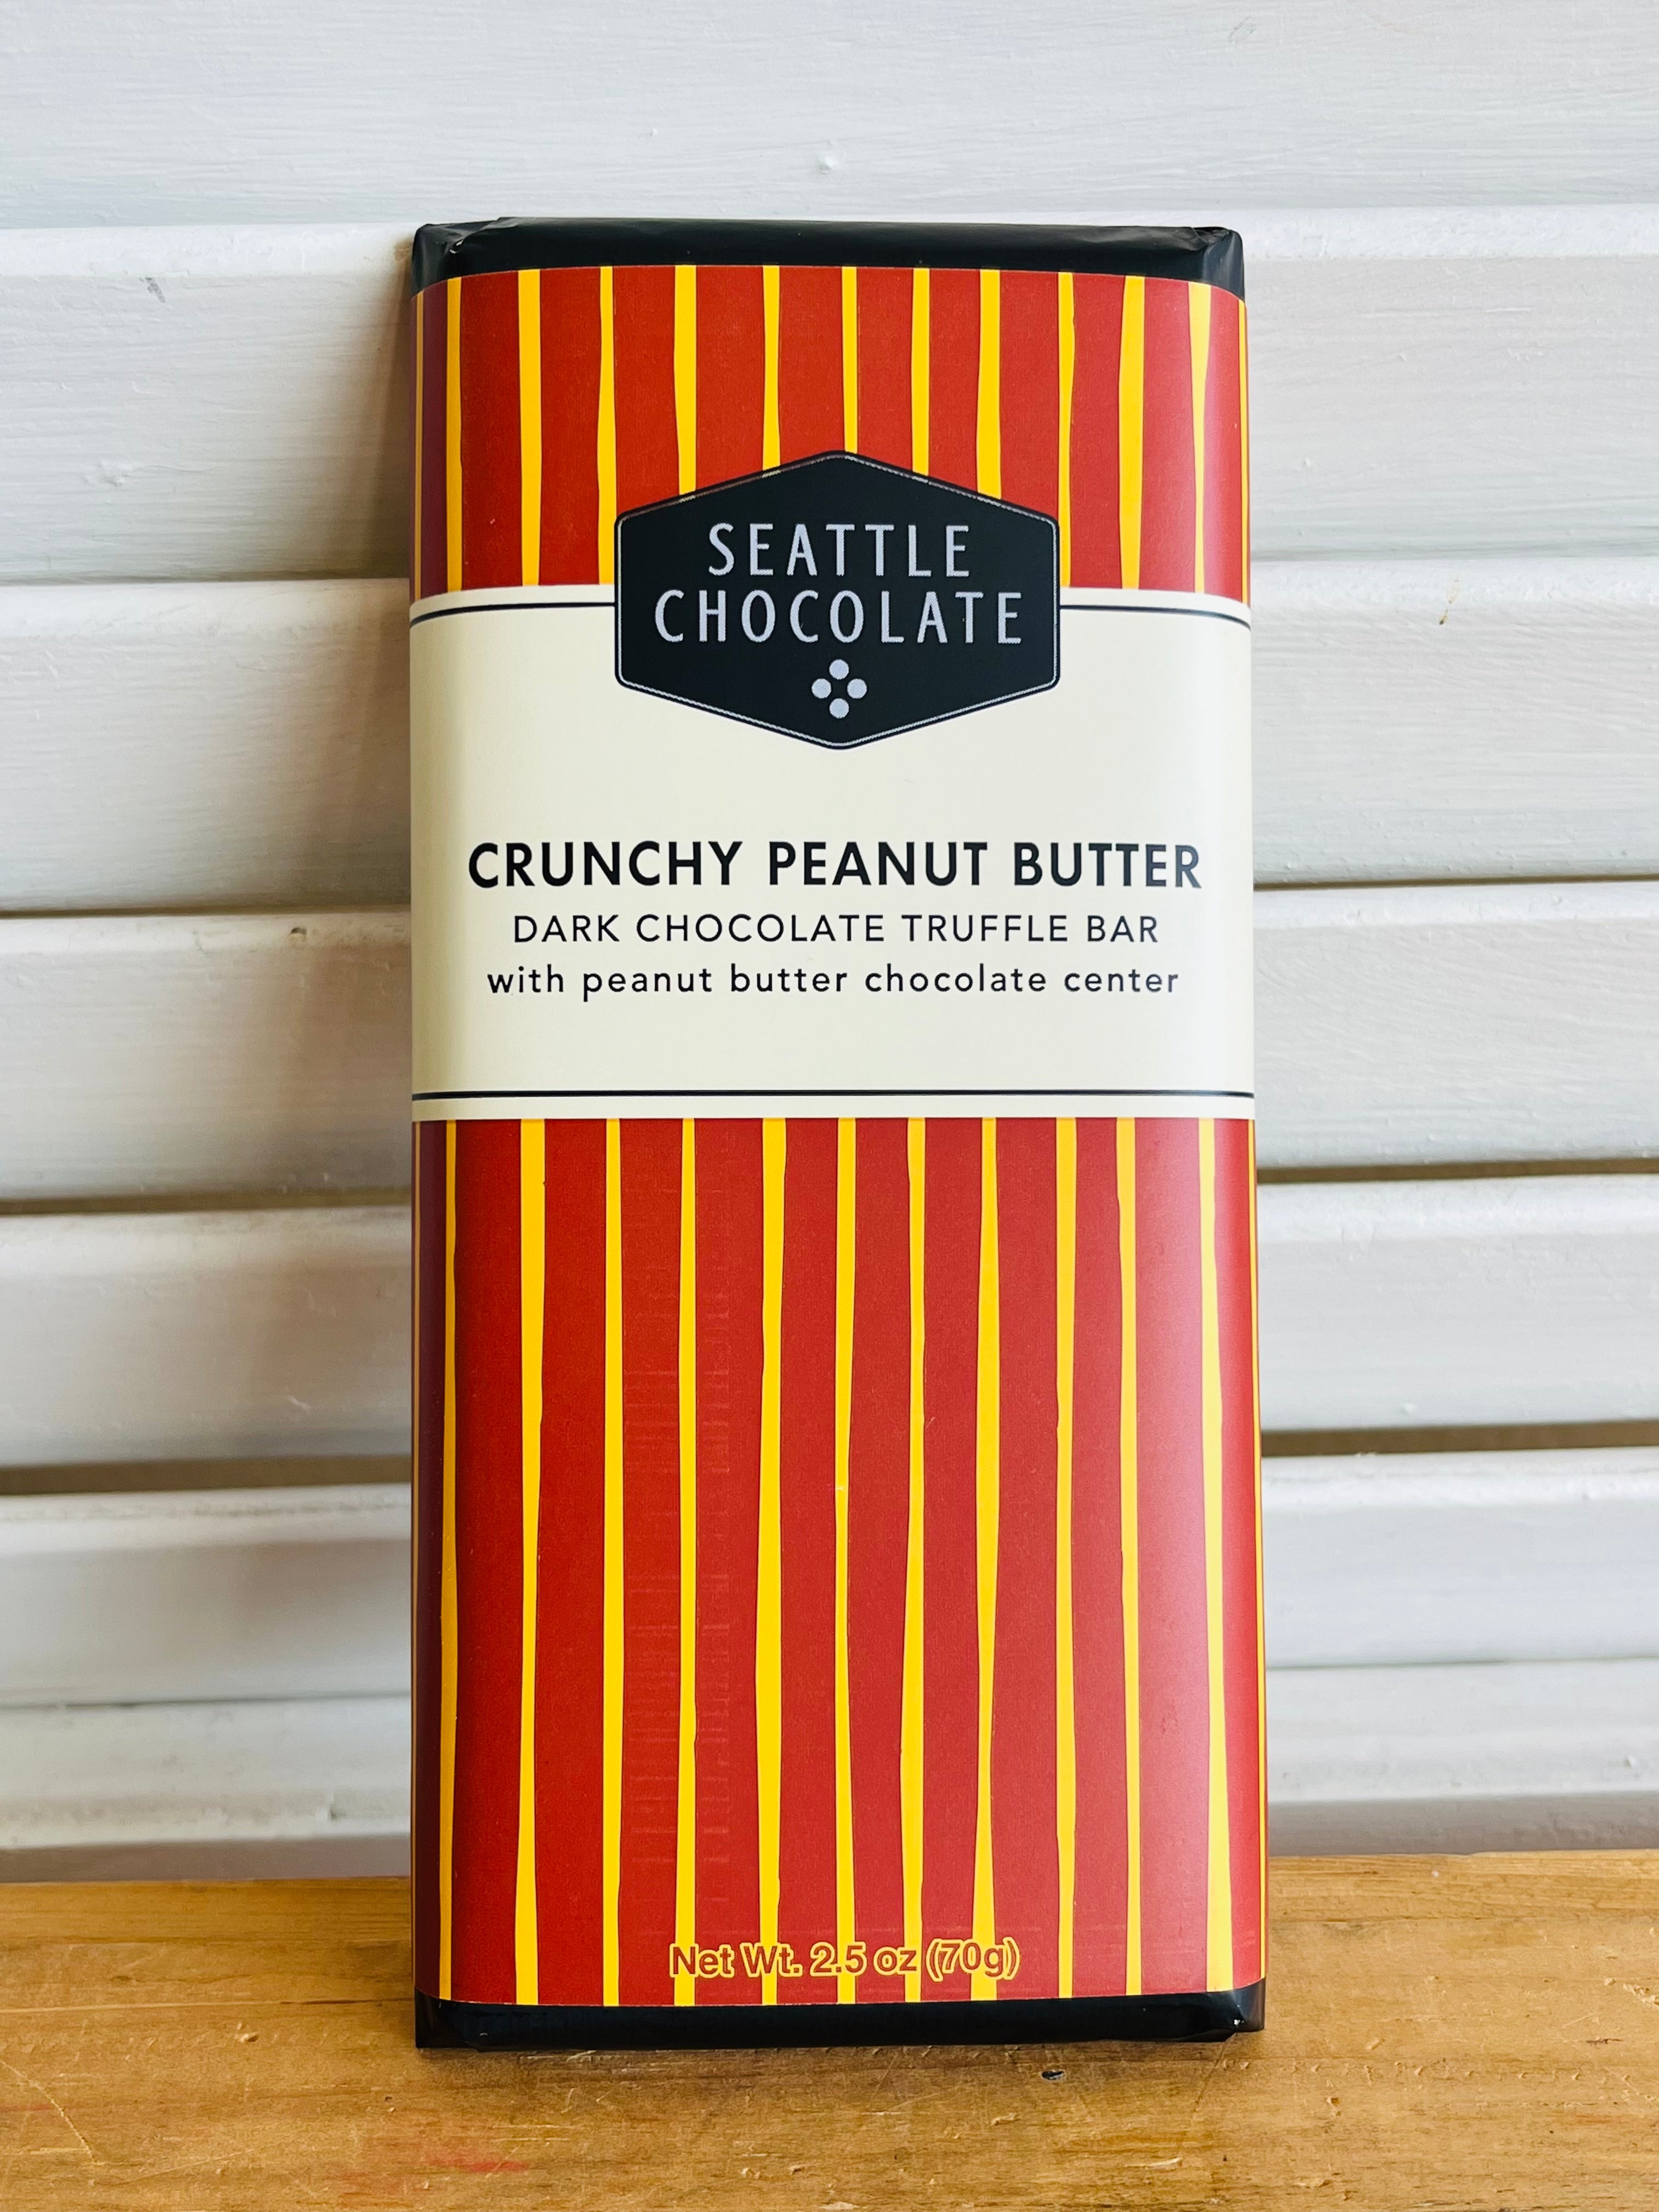 Crunchy Peanut Butter - Seattle Chocolate Truffle bar